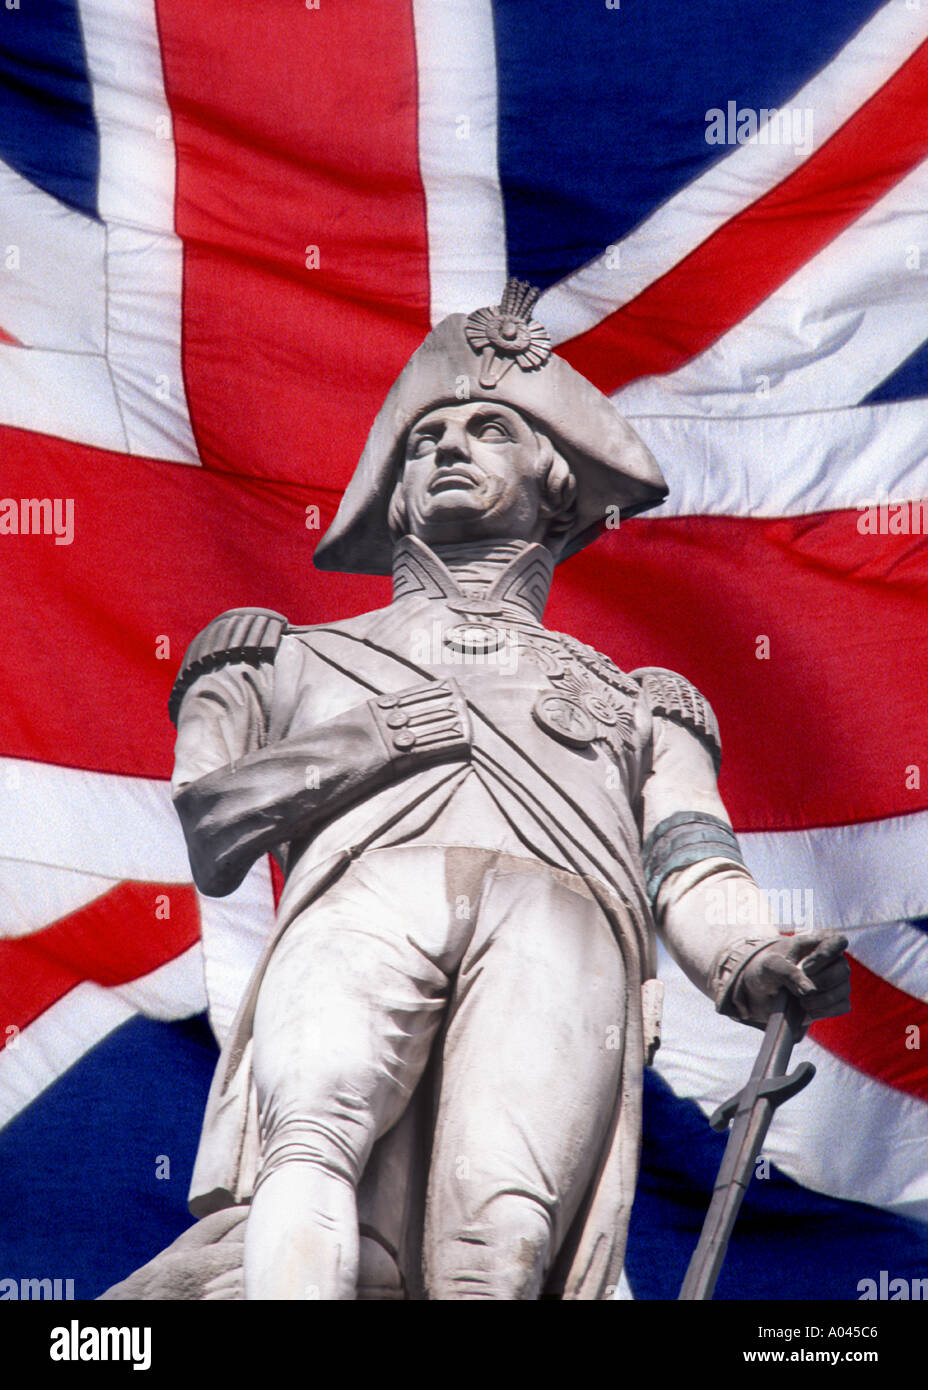 Lord Nelson vor Union Jack Flagge Trafalgar Sq London England Digital Composite Stockfoto